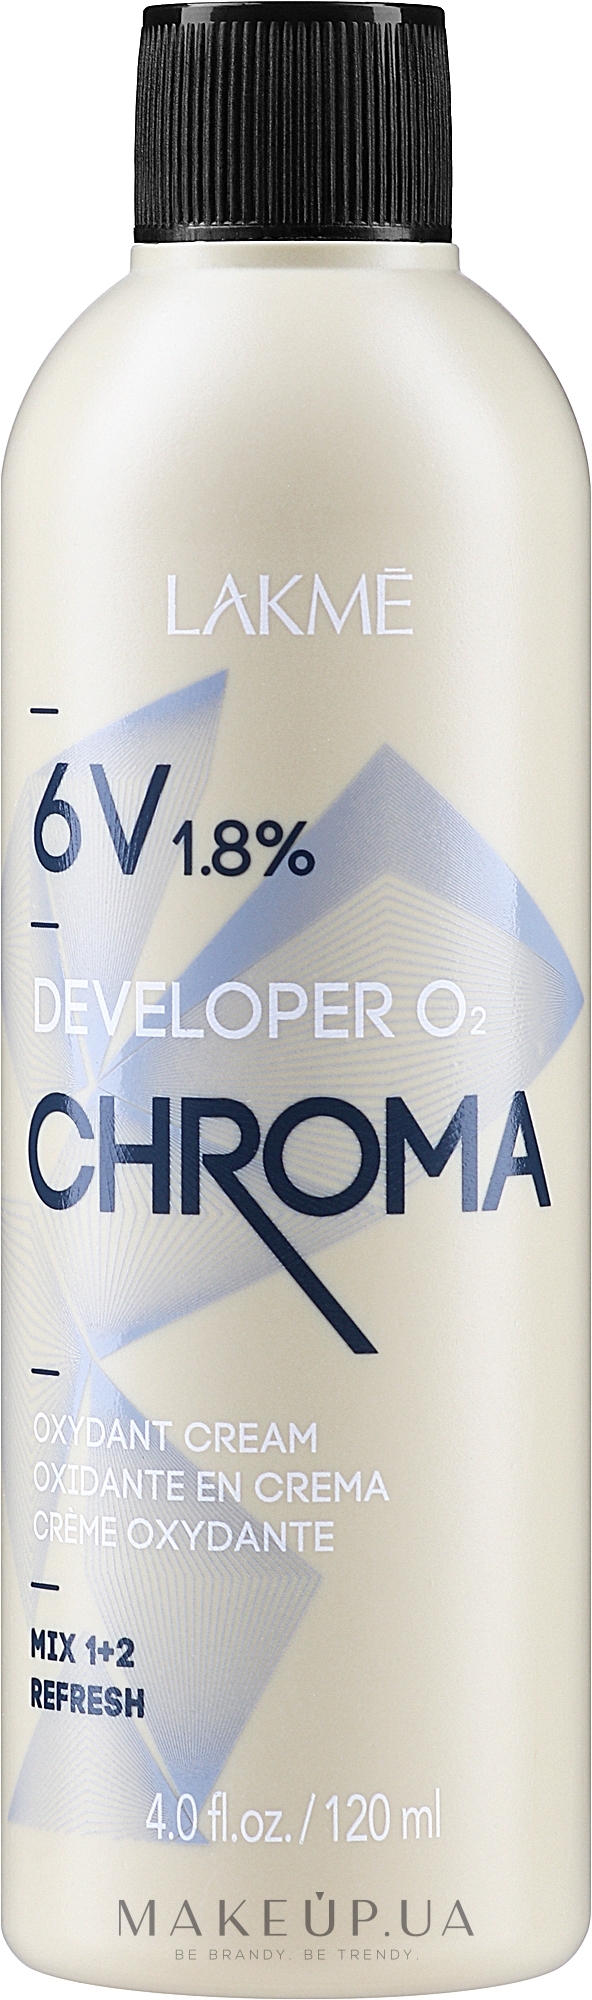 Крем-окислитель - Lakme Chroma Developer 02 6V (1,8%) — фото 120ml